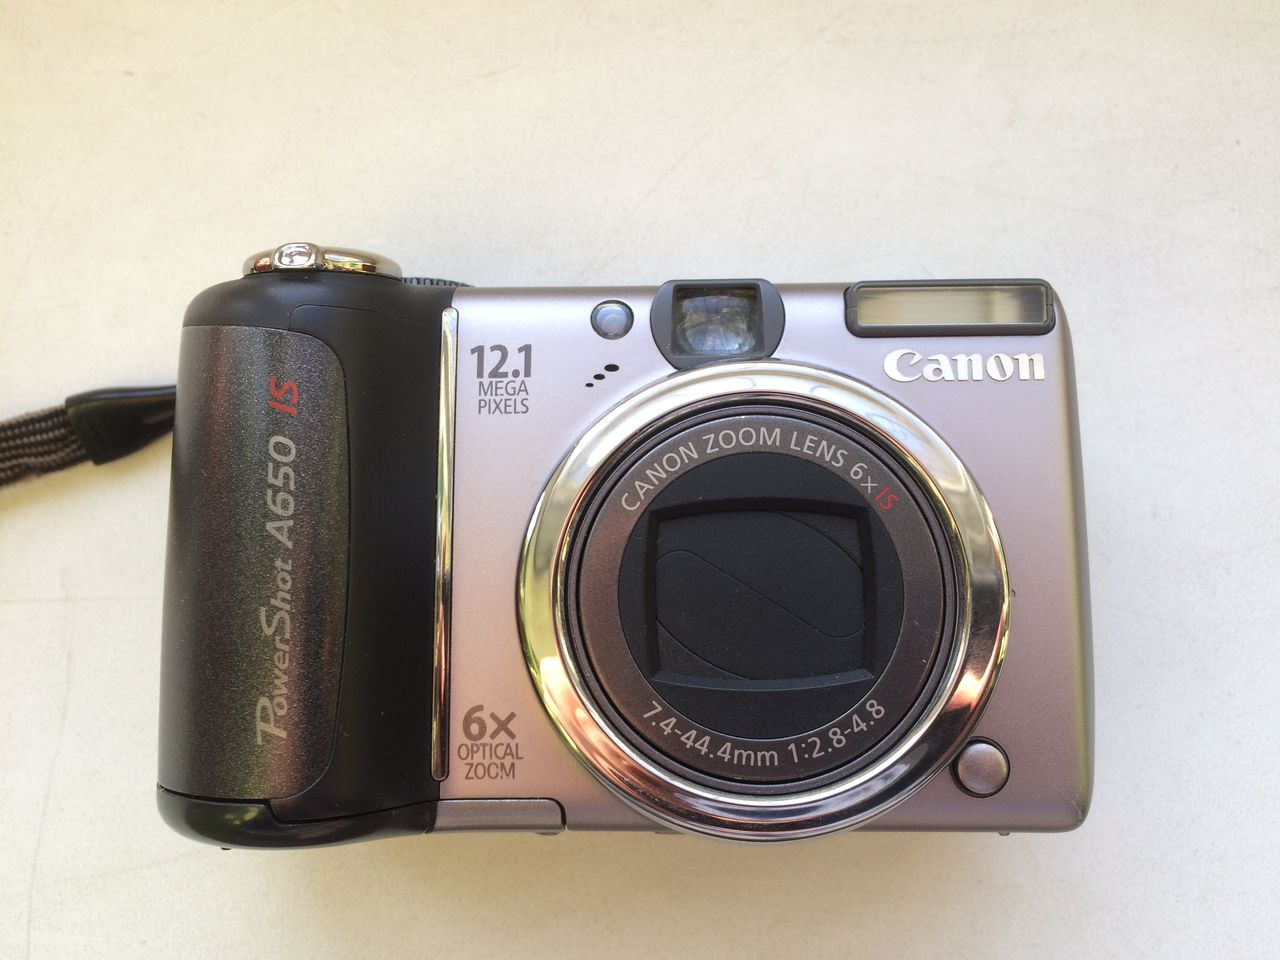 Canon Powershot A650 IS Digital Camera Review | ePHOTOzine